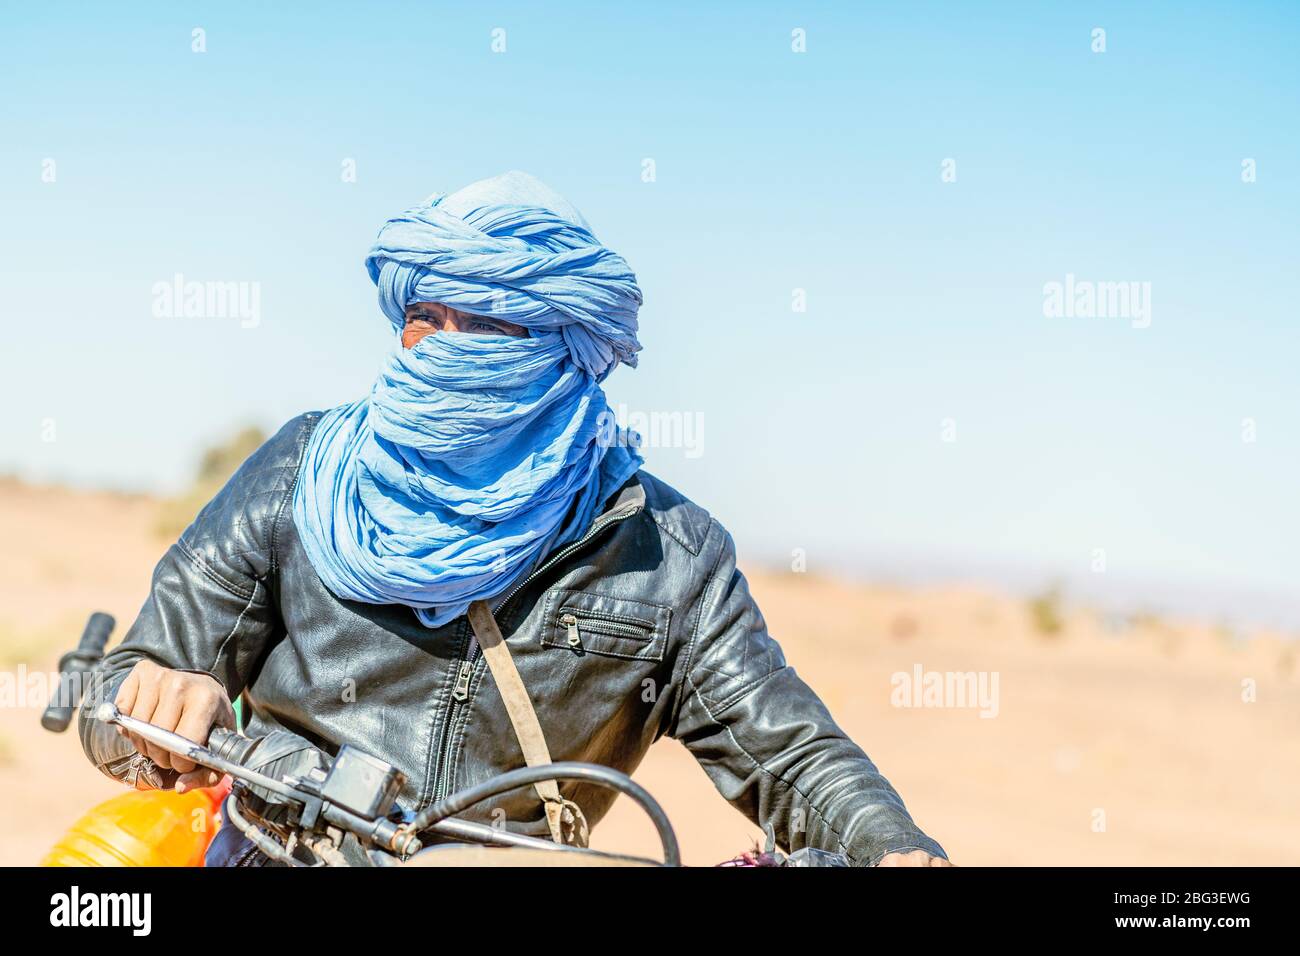 Mhamid, Morocco -  March 17, 2020: Amazing portrait of Bedouin man on his motorbike driving through Sahara Desert. Stock Photo